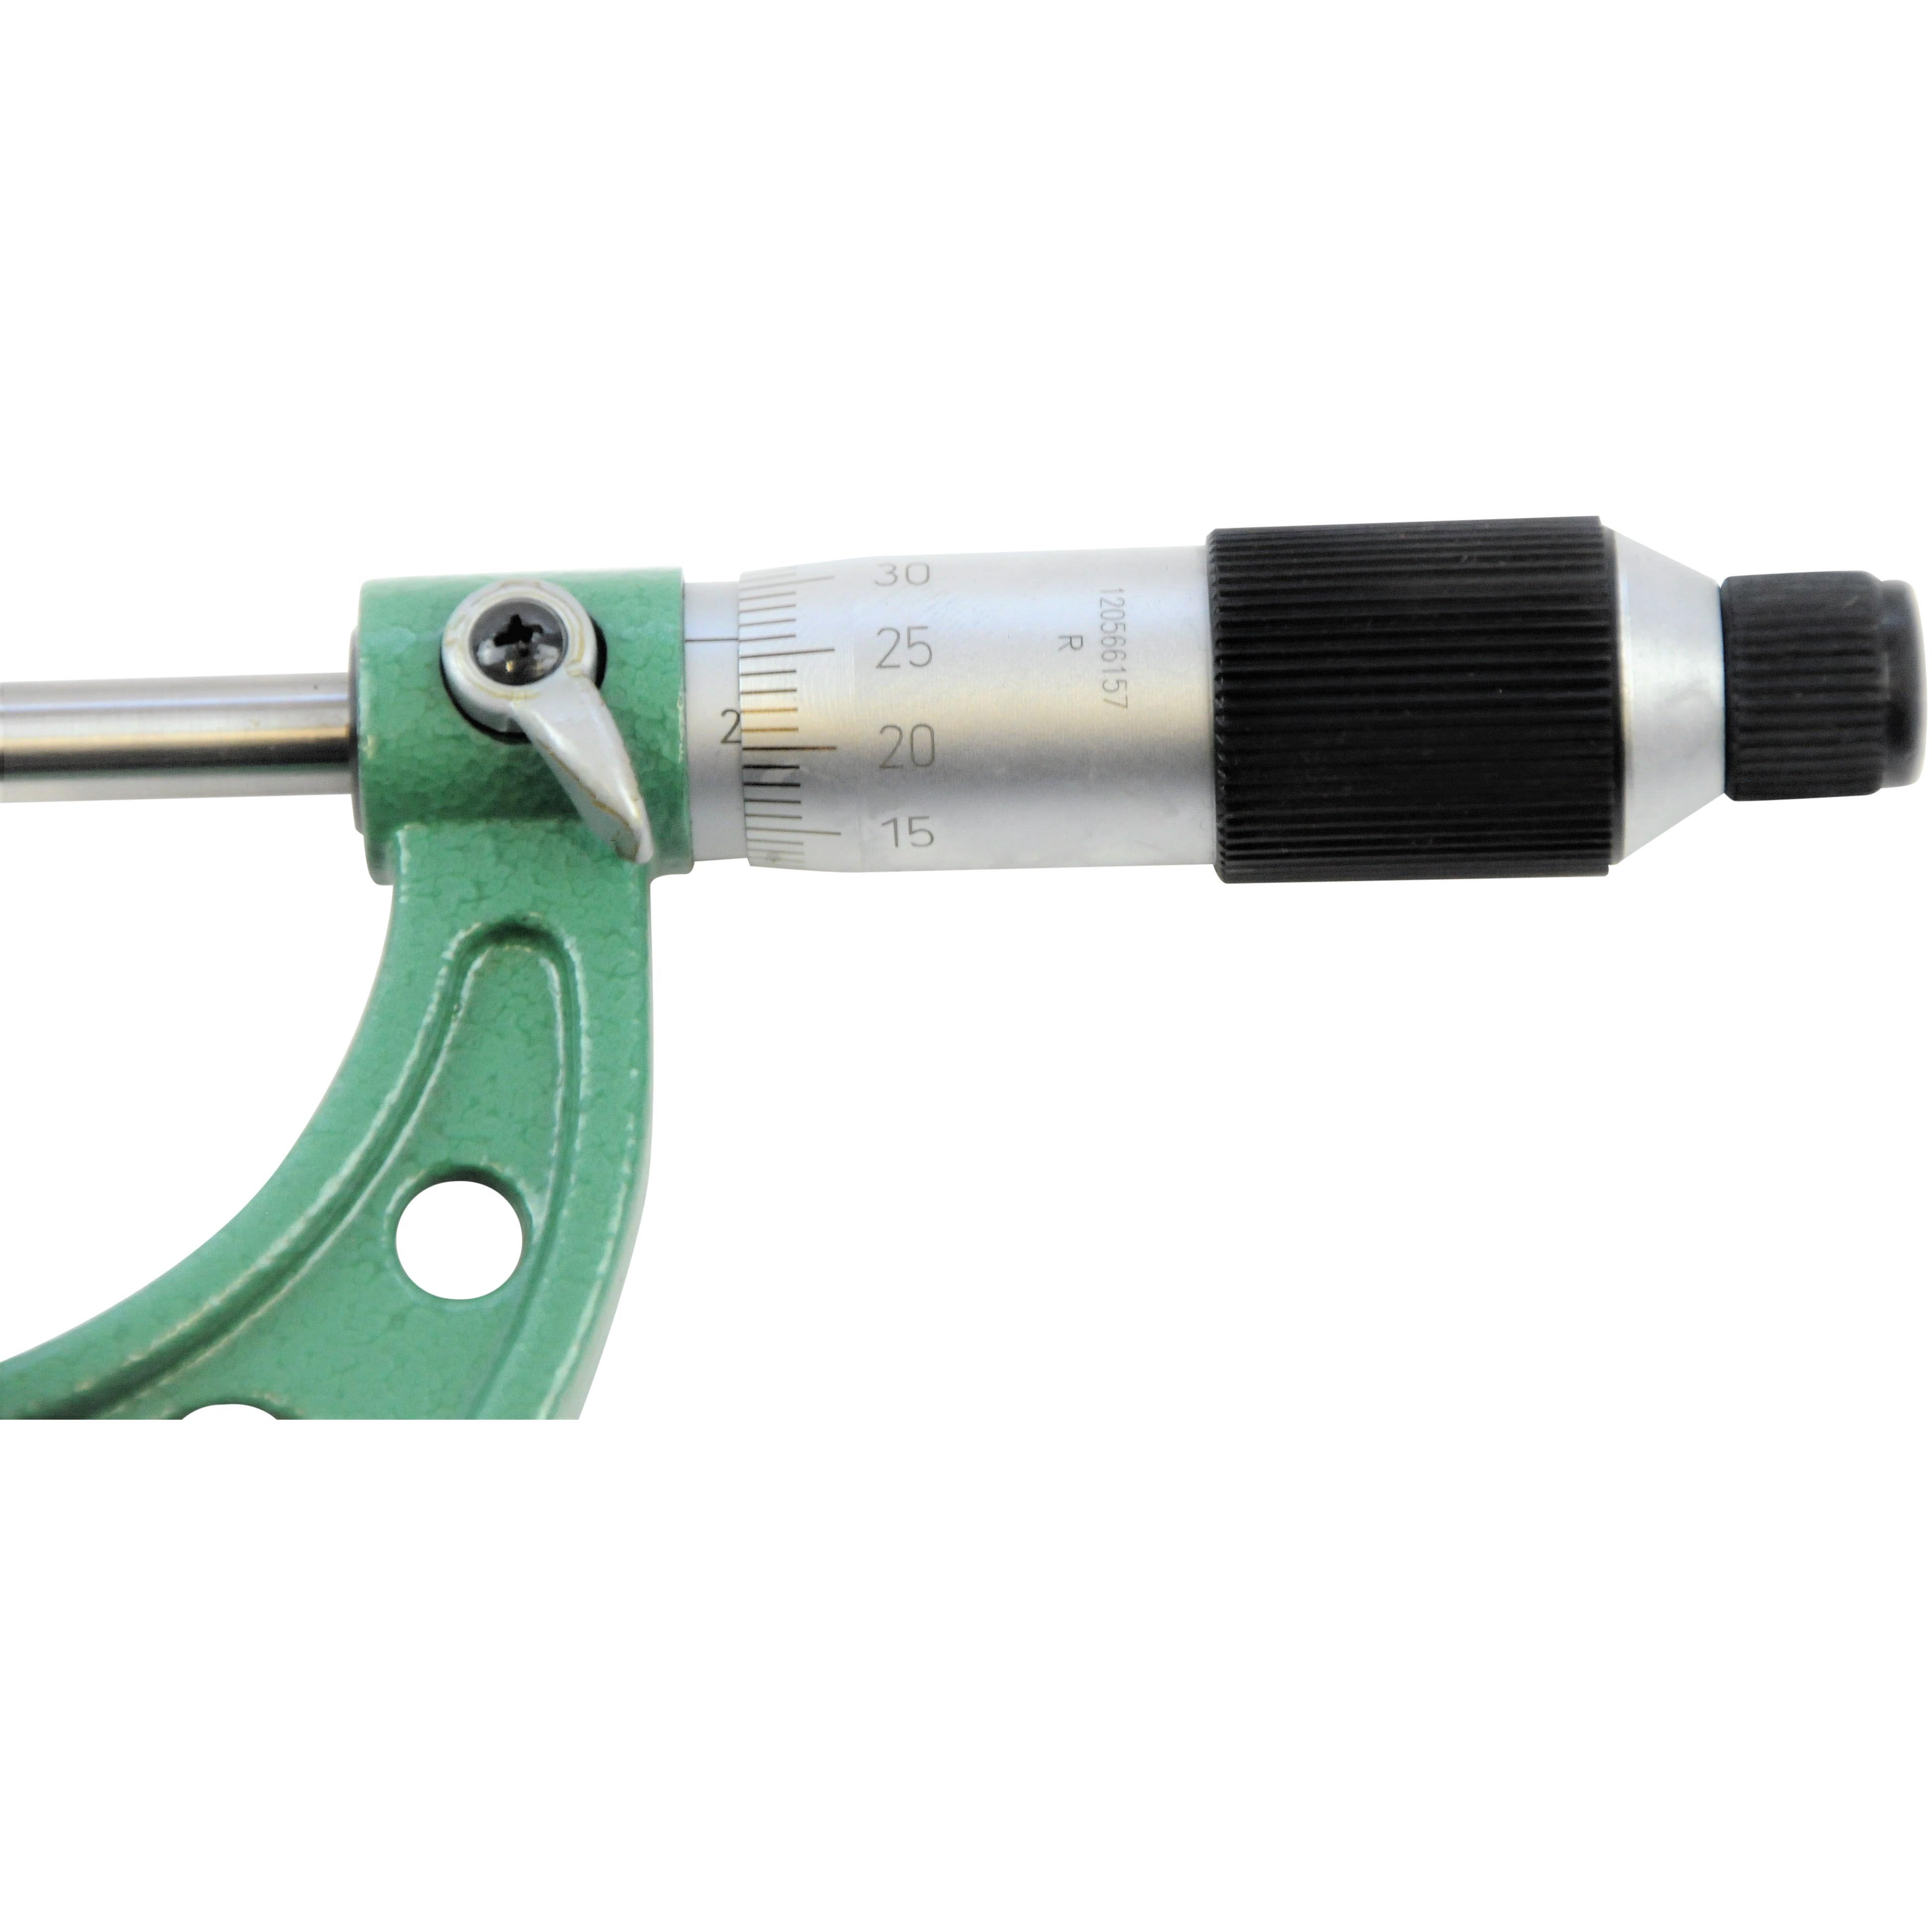 Insize Metric Outside Micrometer 25-50mm Range Series 3203-50FA